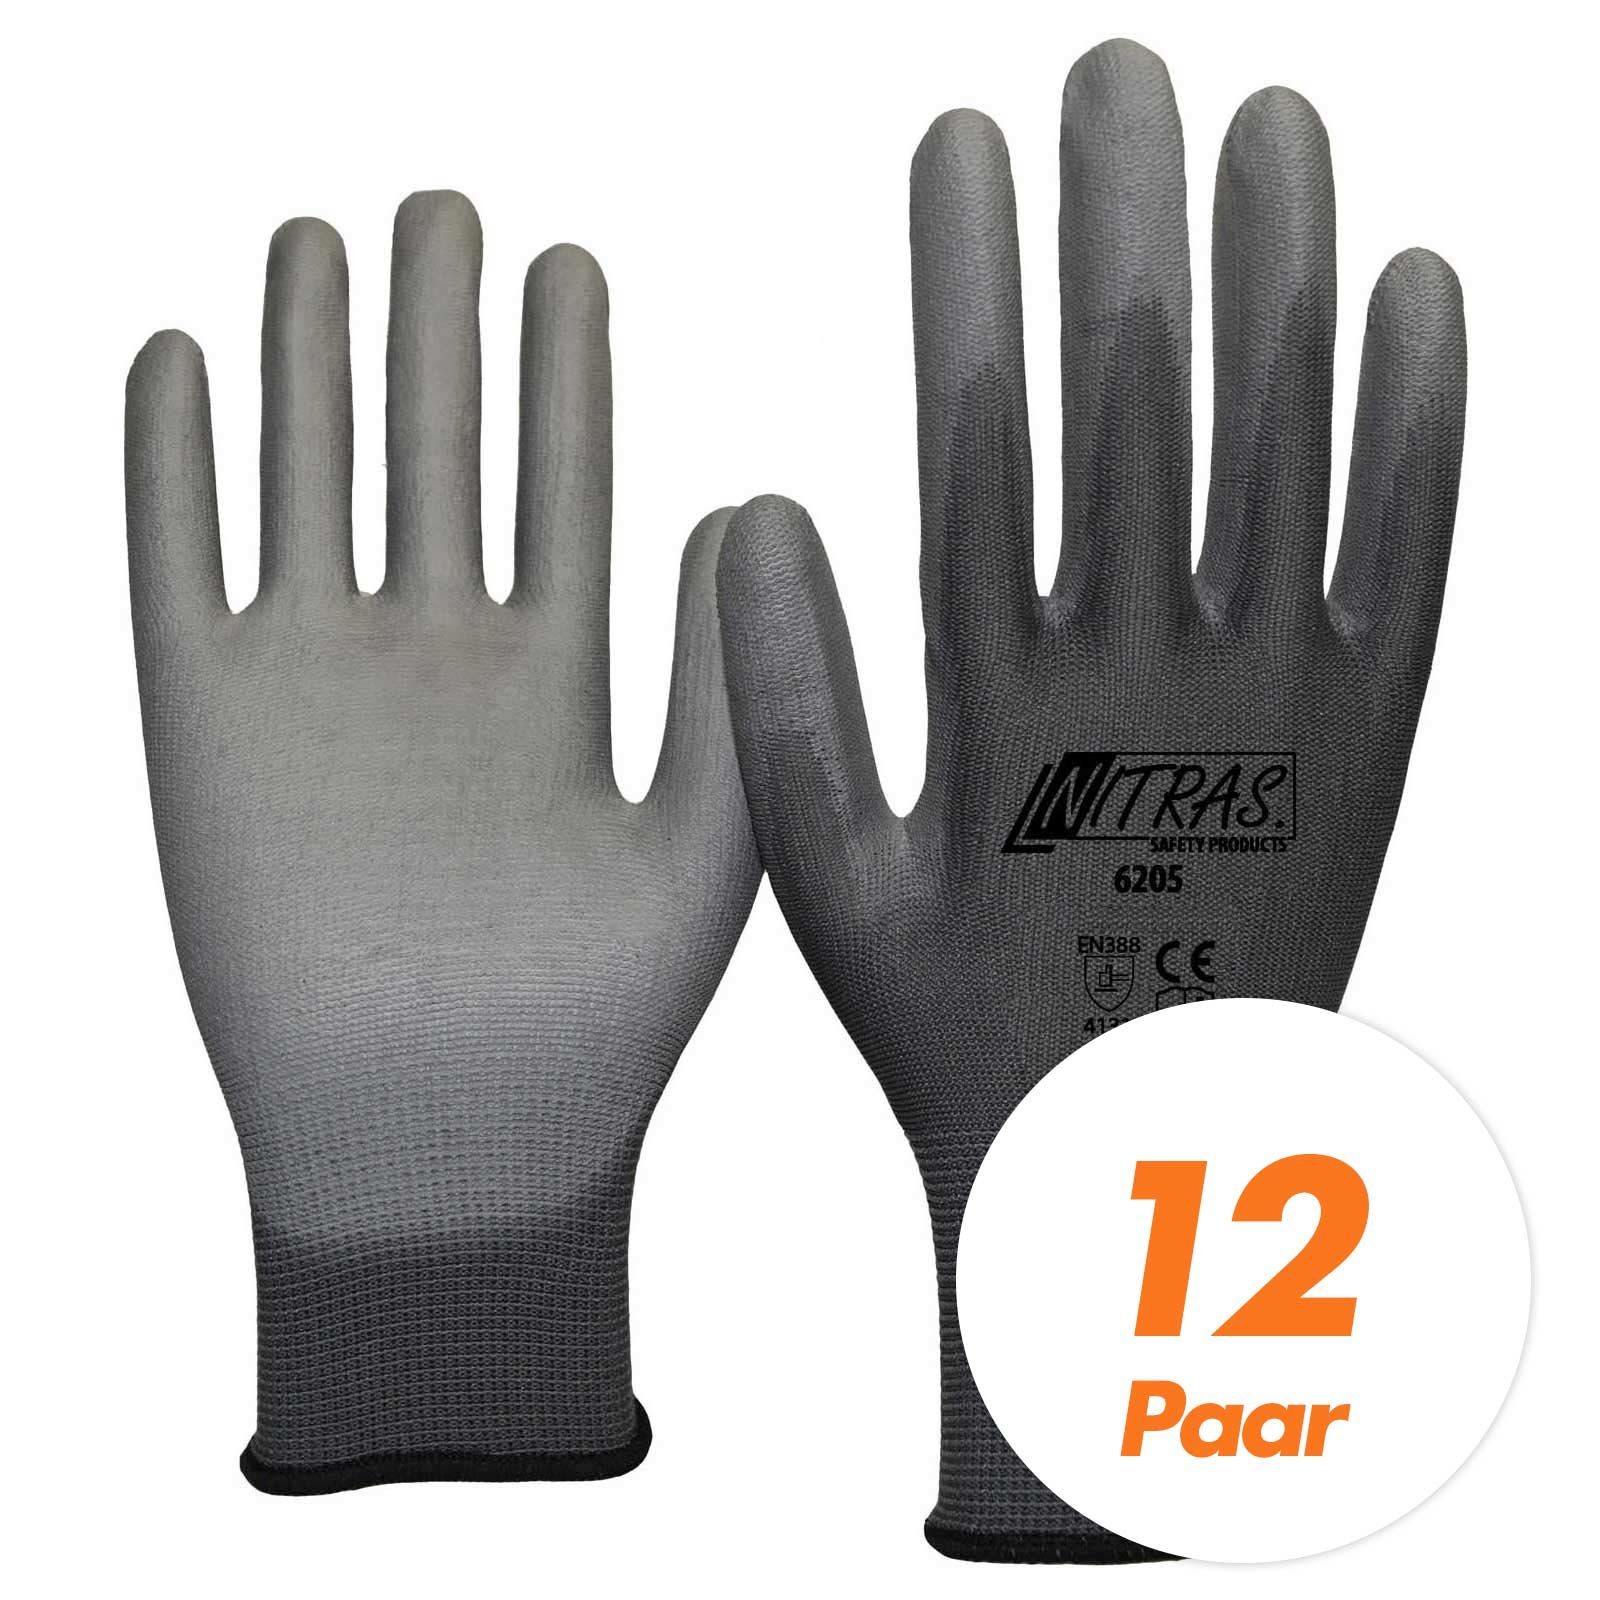 Nitras Nitril-Handschuhe NITRAS 6205 Nylon Strickhandschuh grau, Gartenhandschuhe - 12 Paar (Spar-Set)